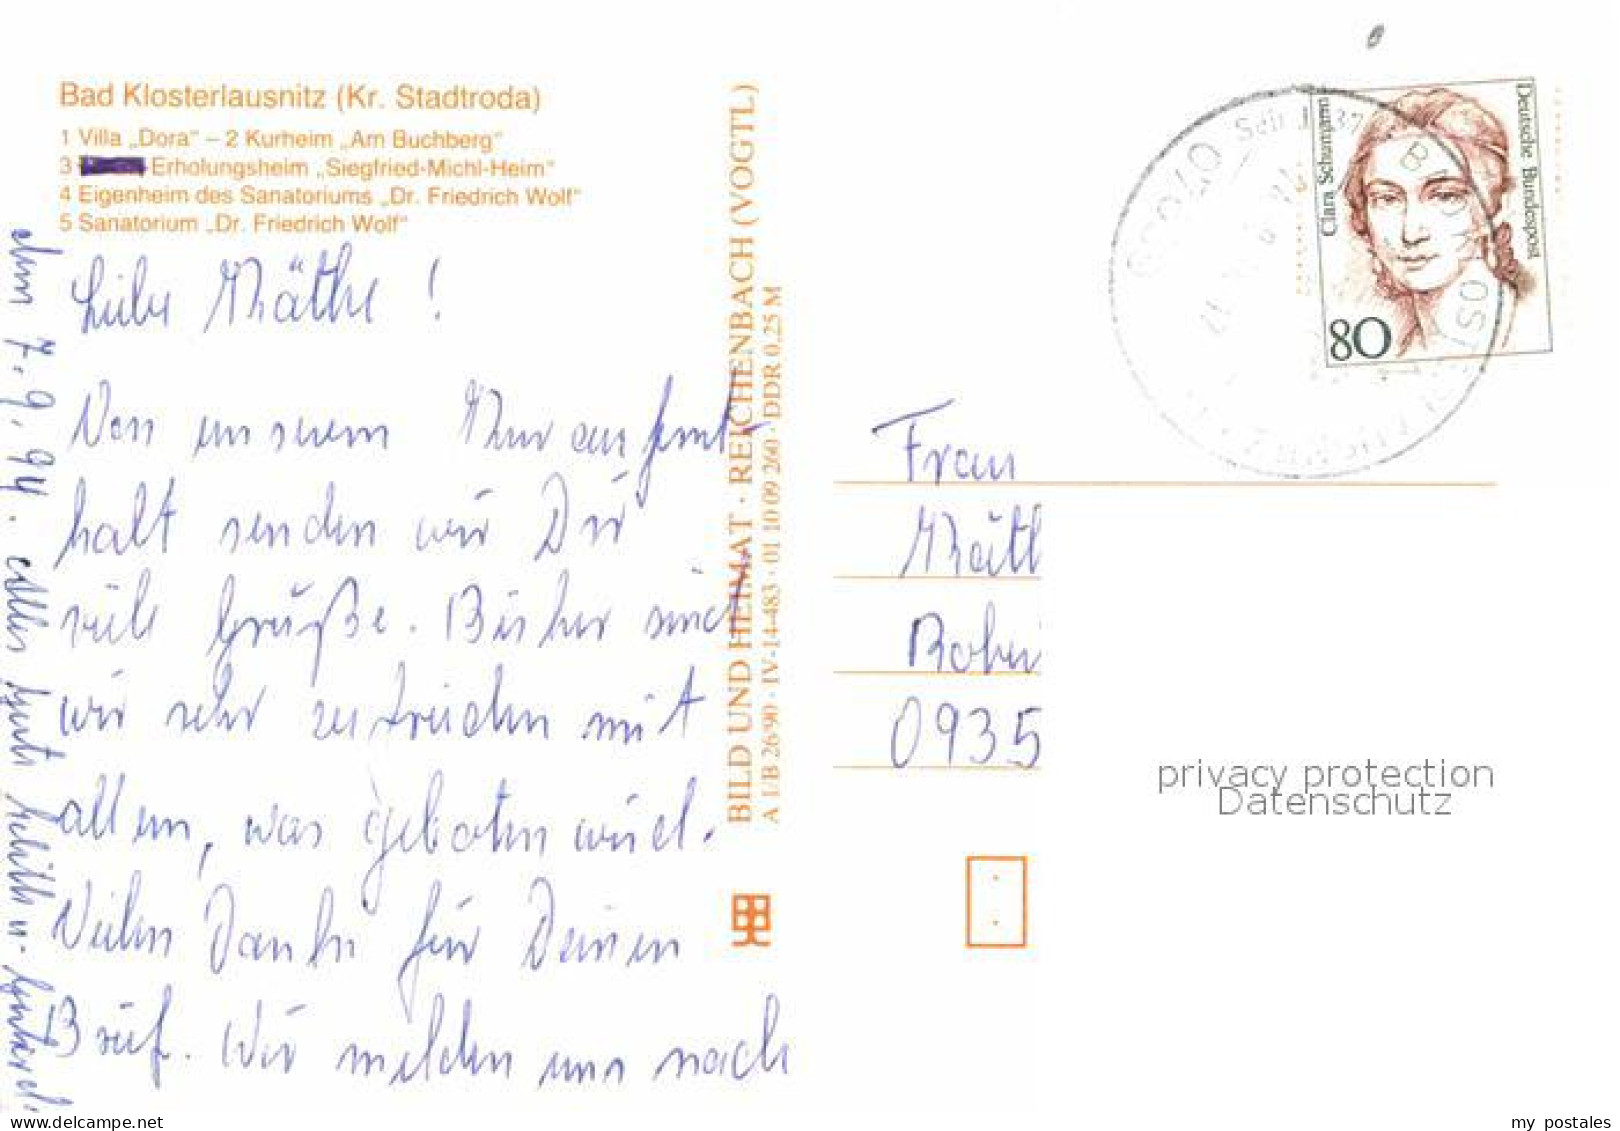 72703514 Bad Klosterlausnitz Villa Dora Kurheim Am Buchberg Erholungsheim Sanato - Bad Klosterlausnitz